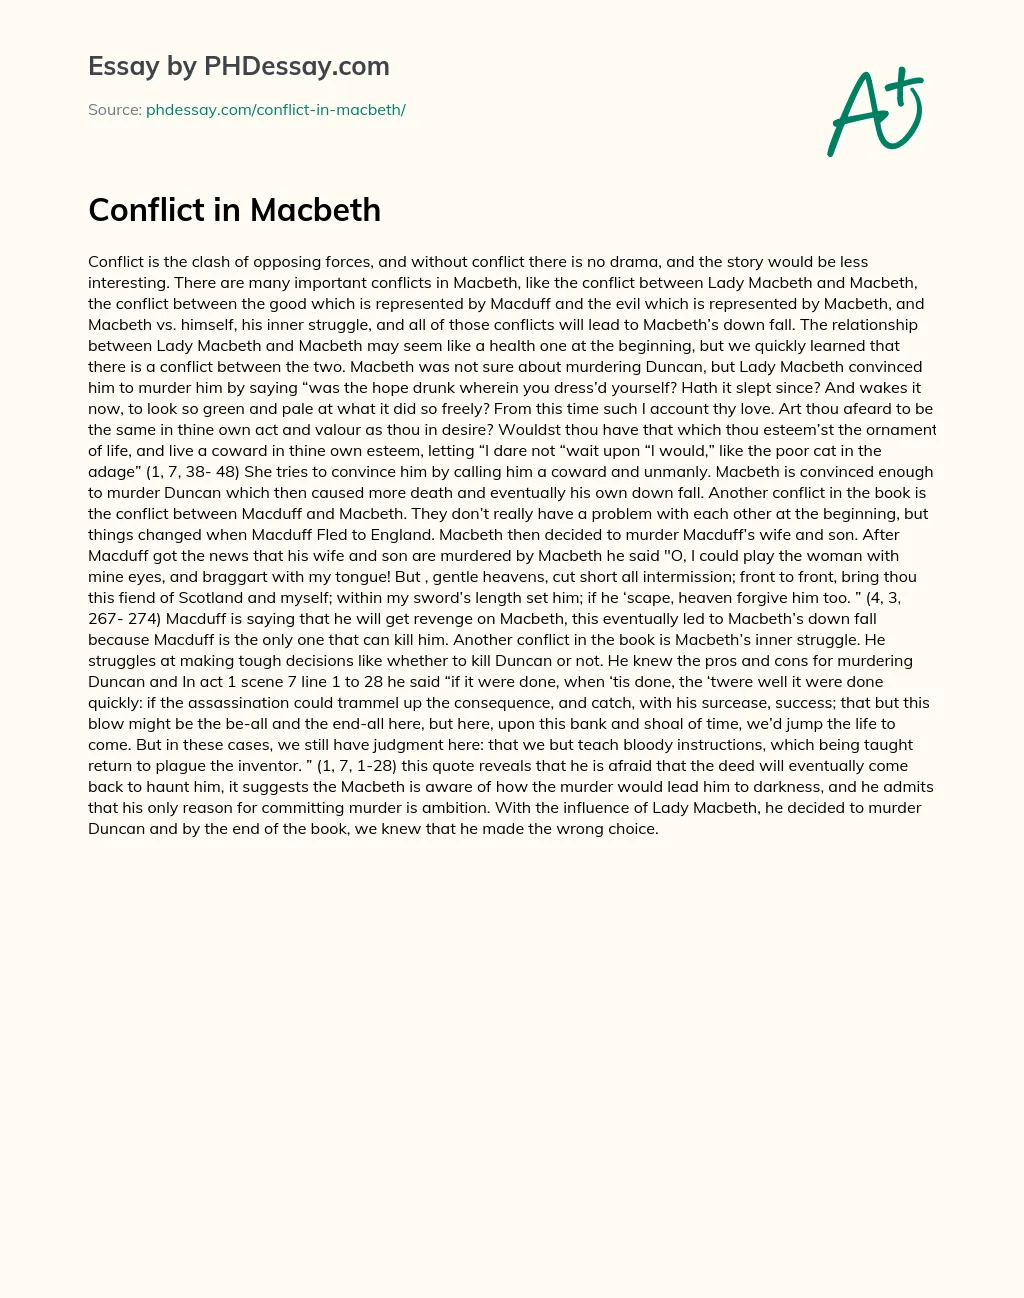 Conflict in Macbeth essay